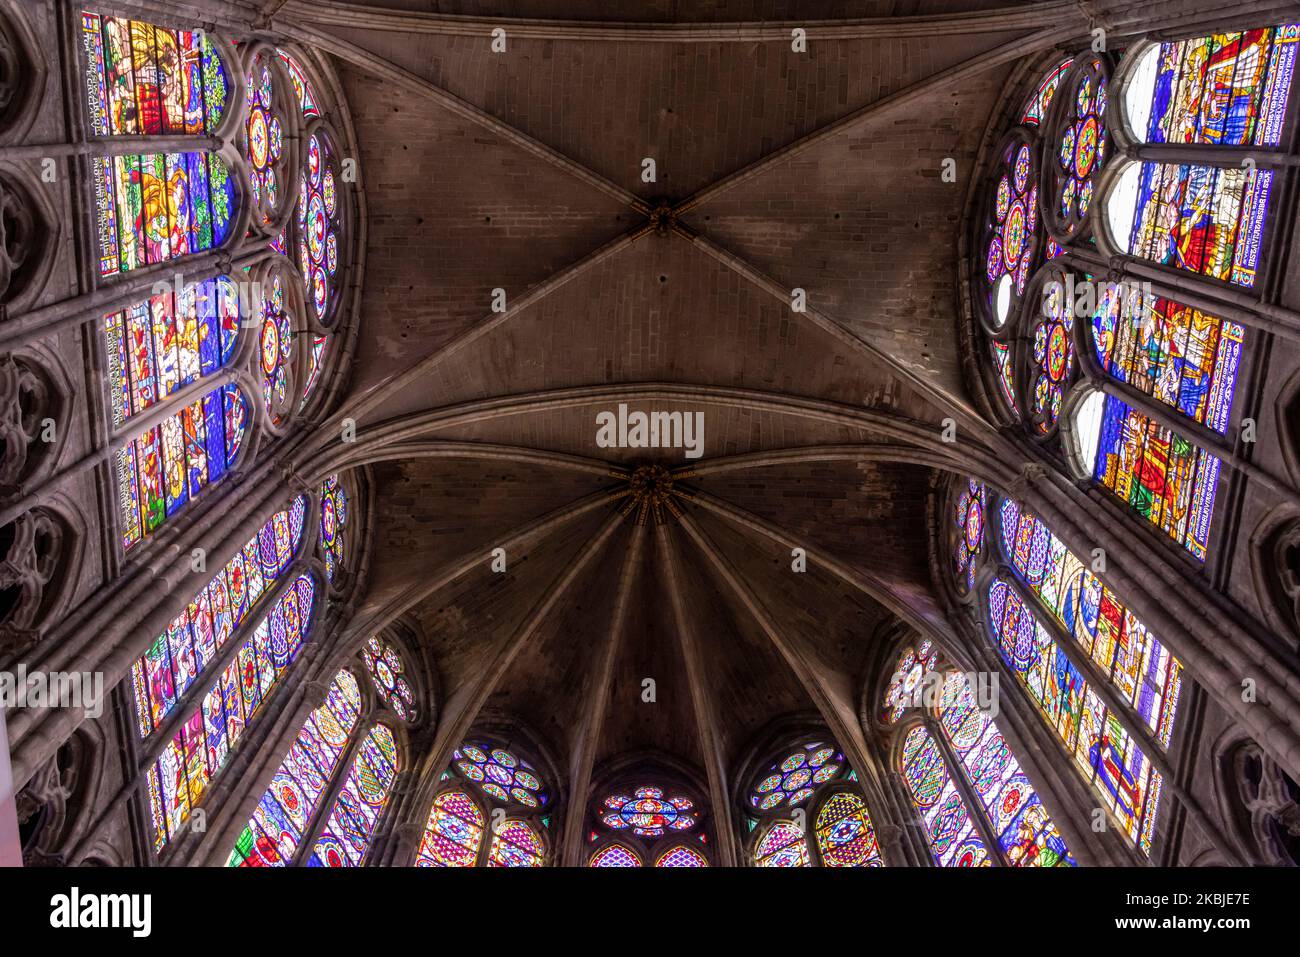 stained glass windows of ambulatory of apse,, Saint-Denis basilica, Paris, France Stock Photo